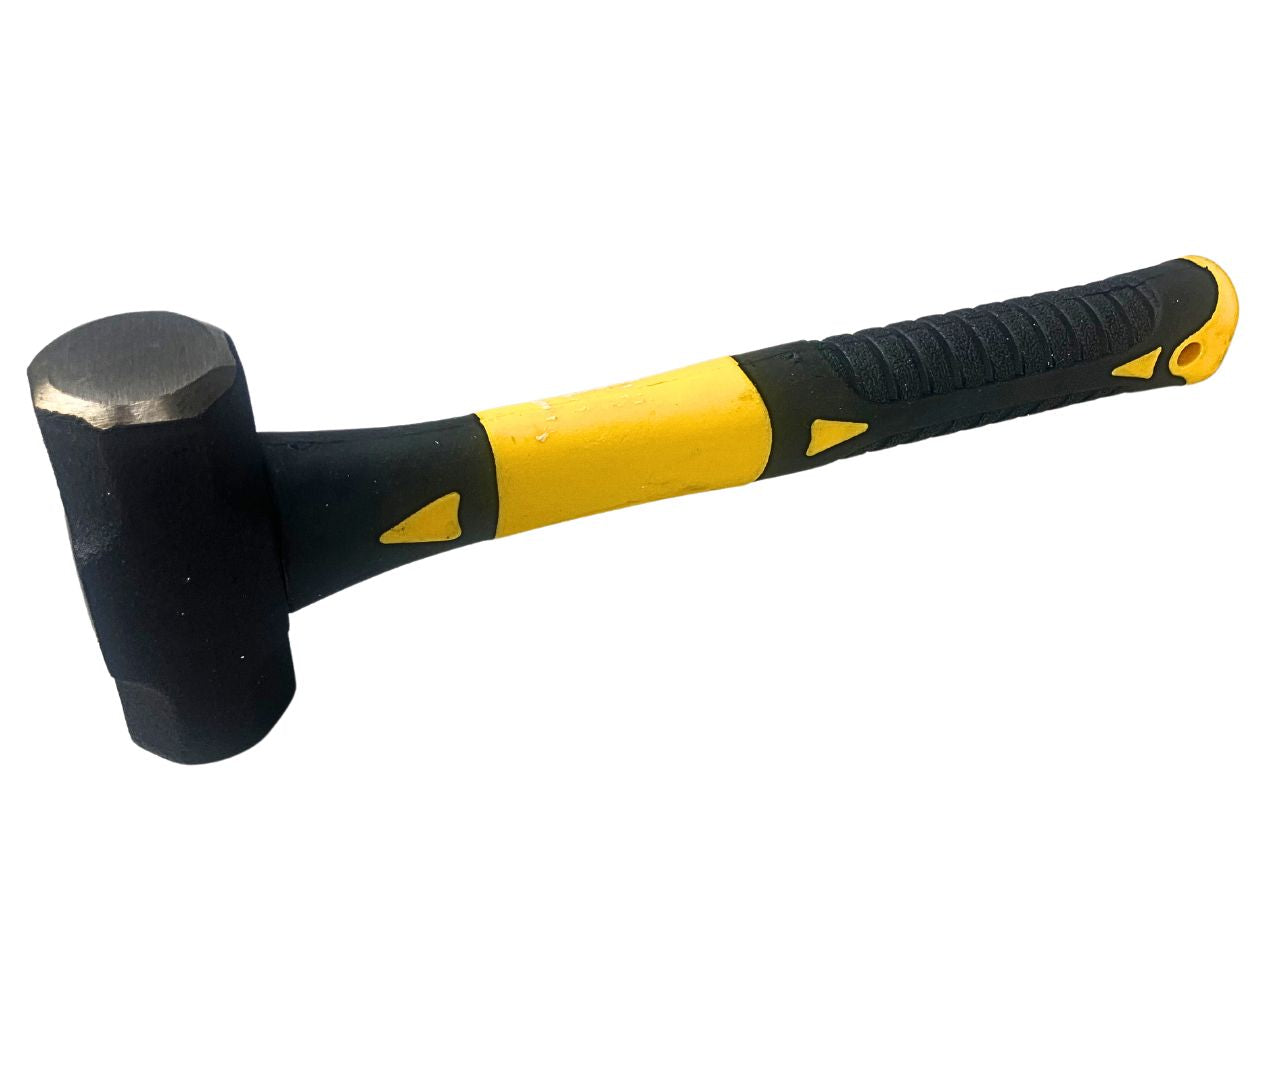 1.5 Lb Sledge Hammer with Fiberglass Handle